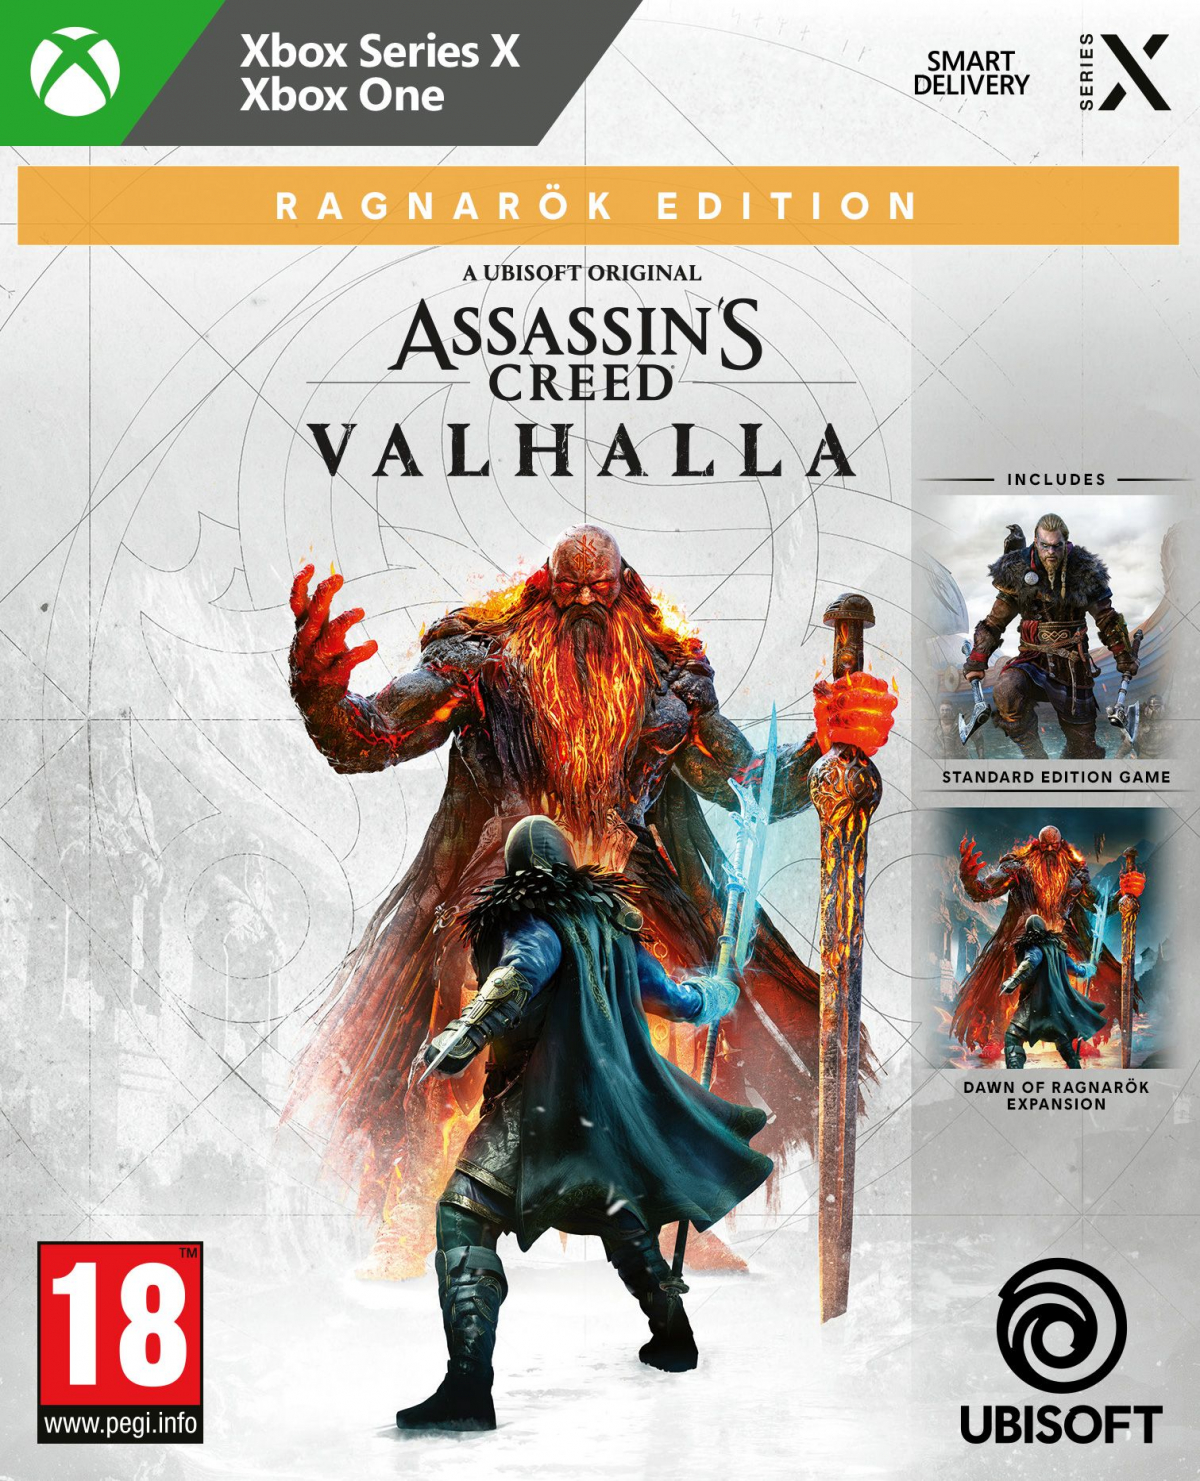 XBOXOne/SeriesX Assassins Creed Valhalla Ragnarök Edition